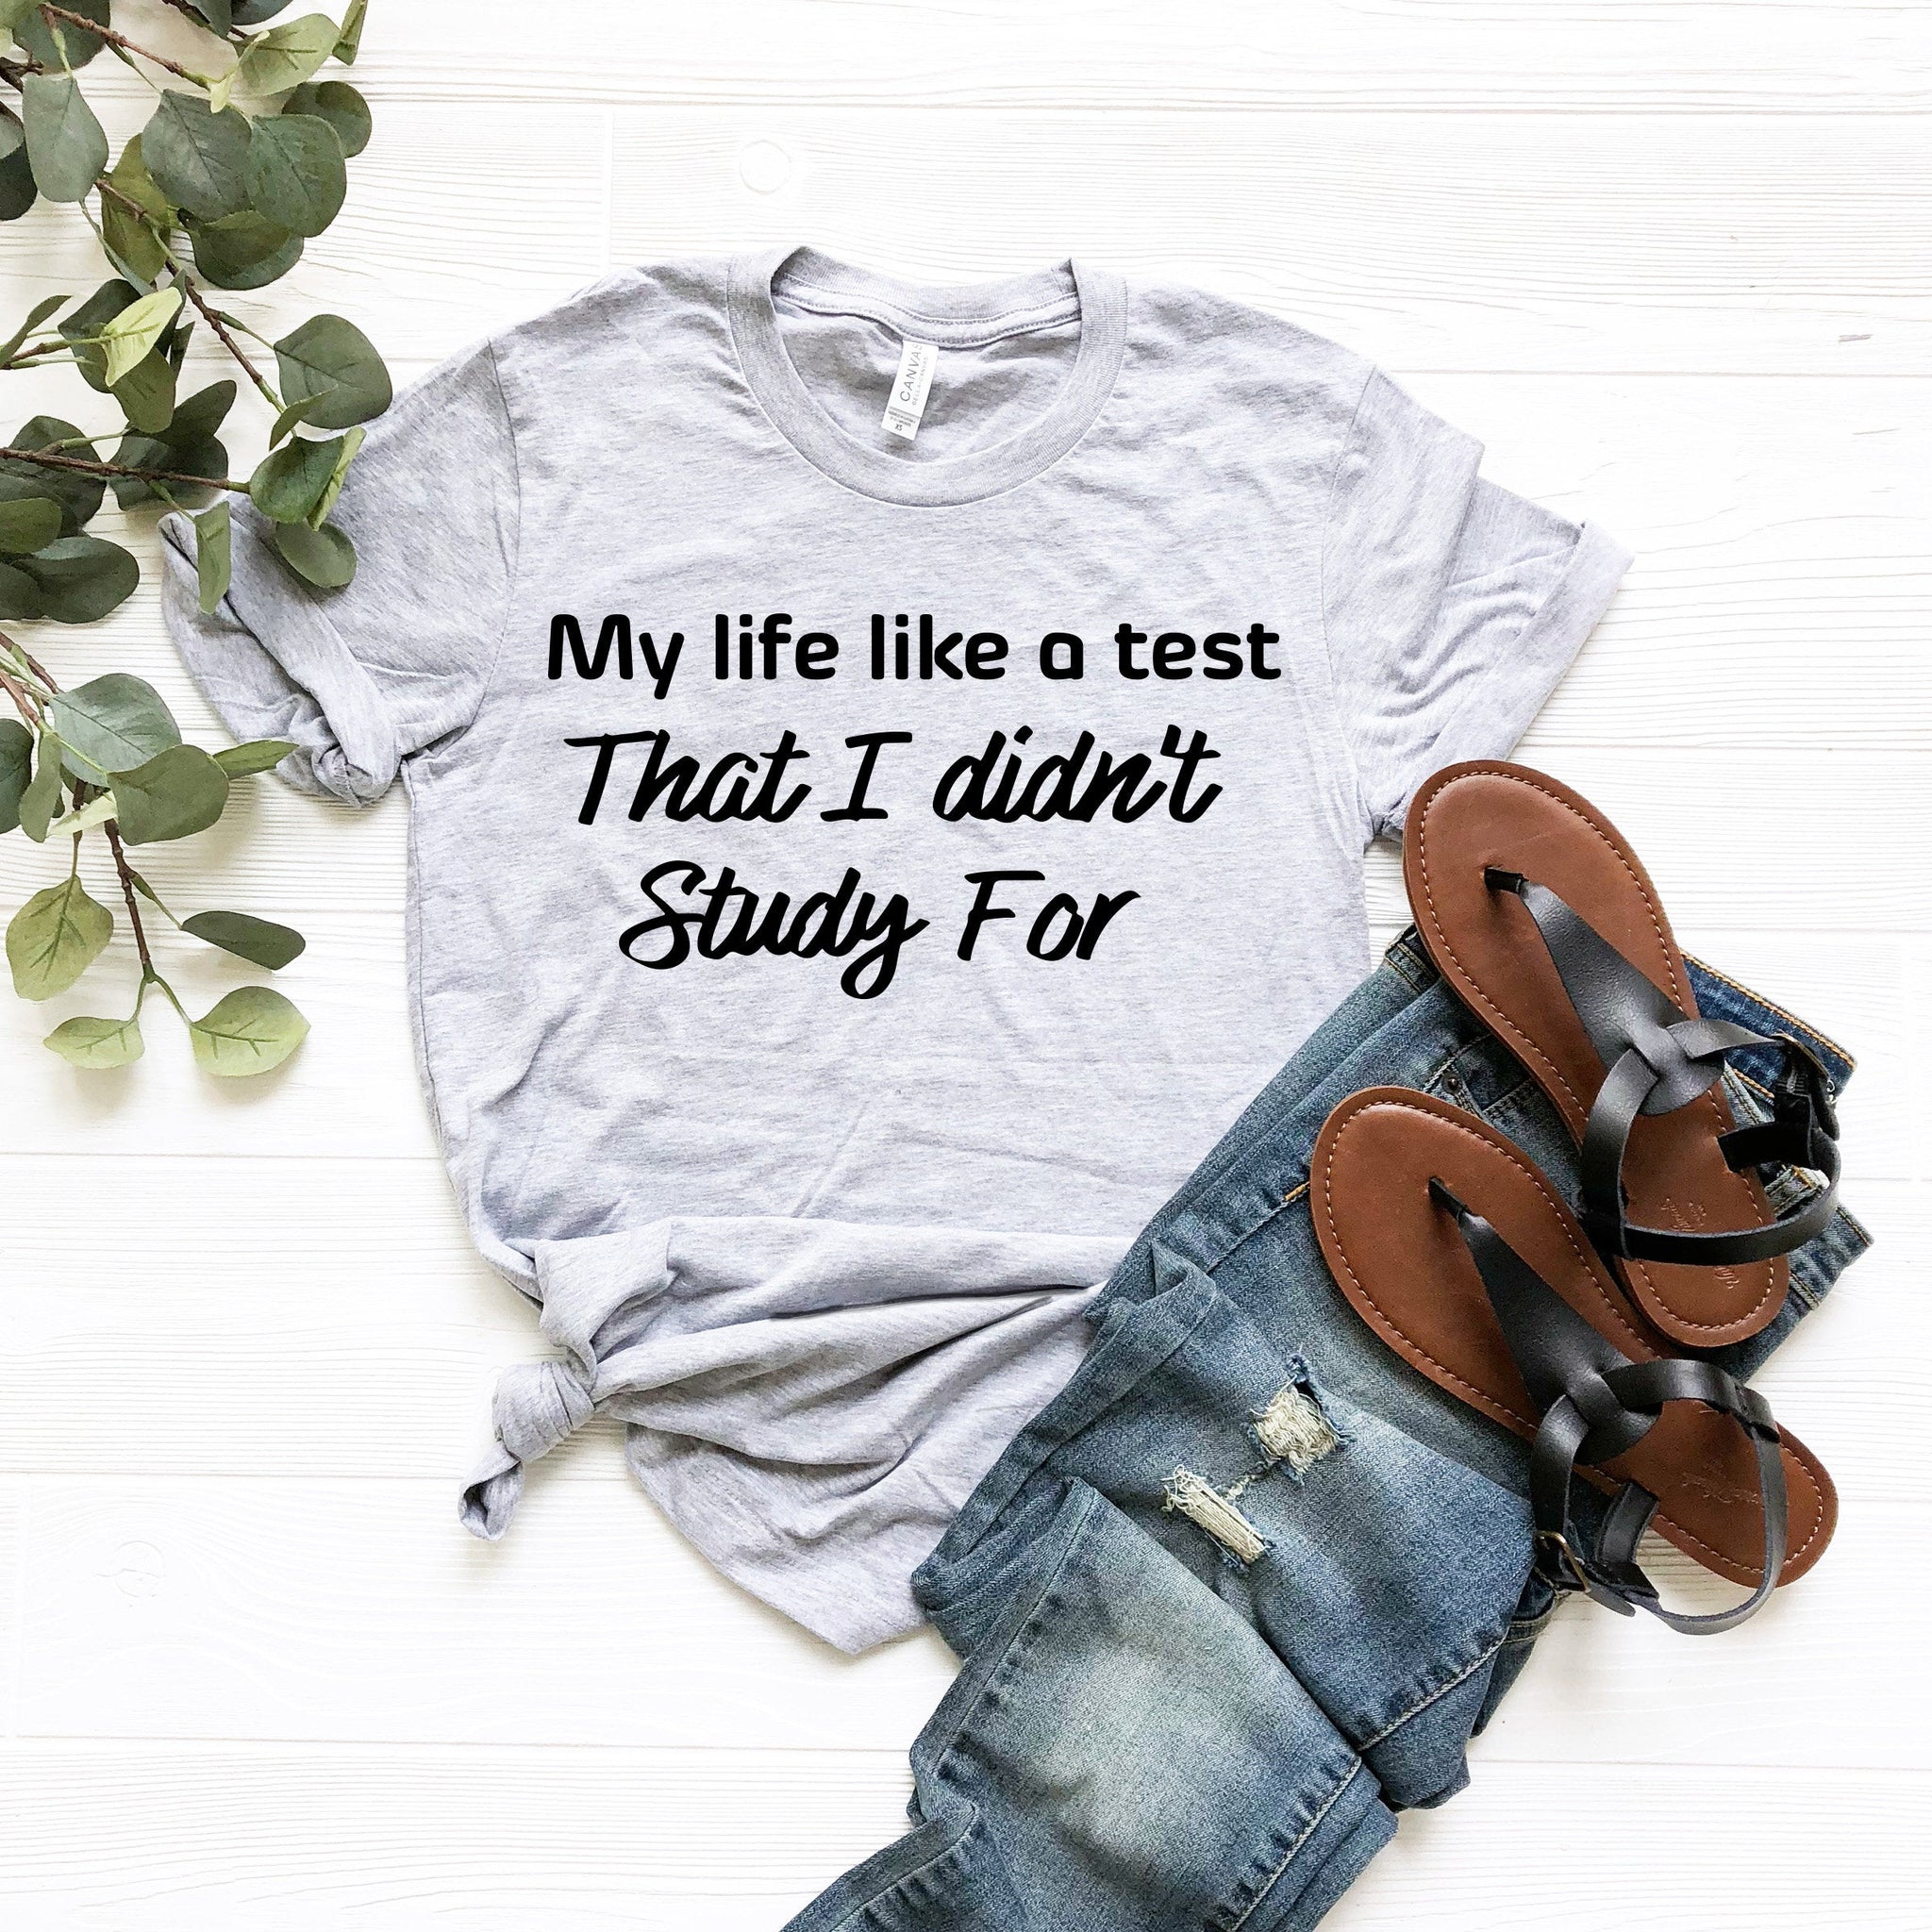 Funny Shirt | Sarcastic Shirt | Funny Slogan Shirts | My Life Like A Test | Sassy | Funny Tshirt Sayings | Funny Tshirts For Women - Fastdeliverytees.com